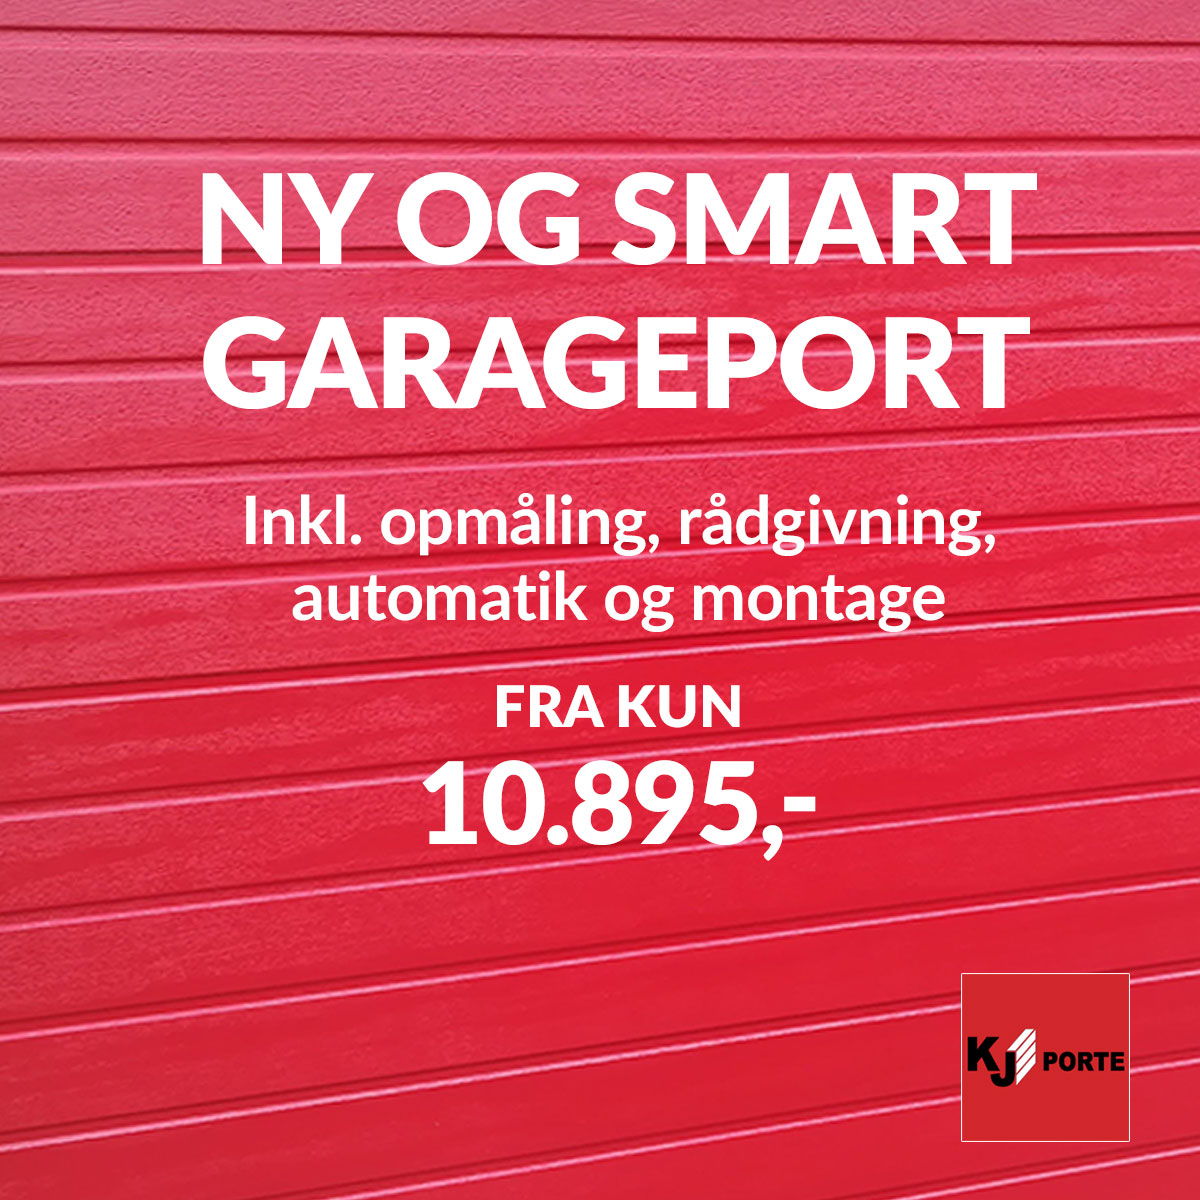 Ny-og-smart-garageport-til-10.895,-.-Rød-ledhejseport-fra-KJ-Porte